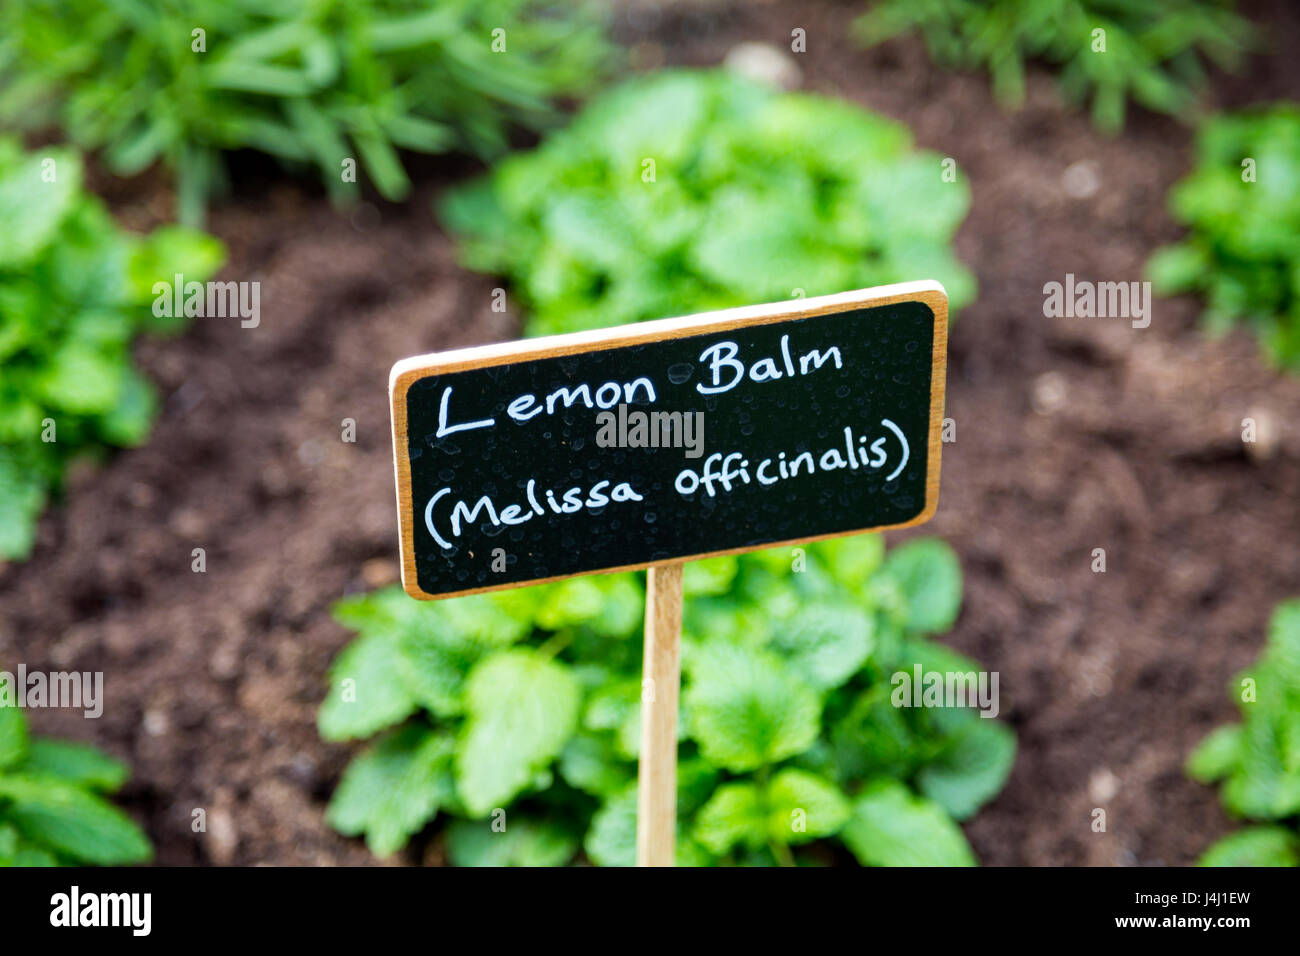 Label for Lemon Balm (Melissa Officinalis) in the garden Stock Photo